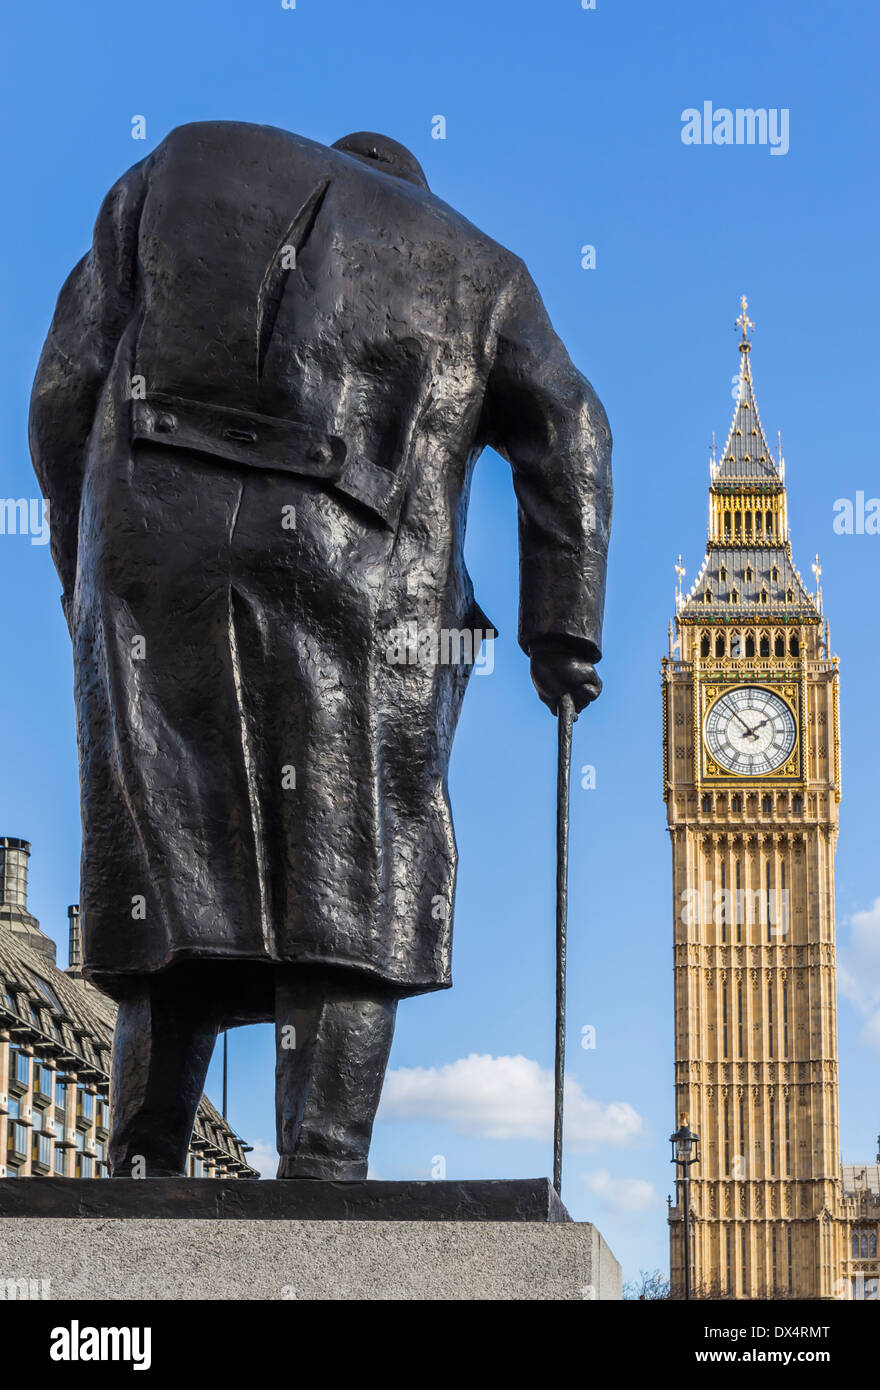 Sir Winston Churchill estatua en la Plaza del Parlamento con el Big Ben de Londres Foto de stock